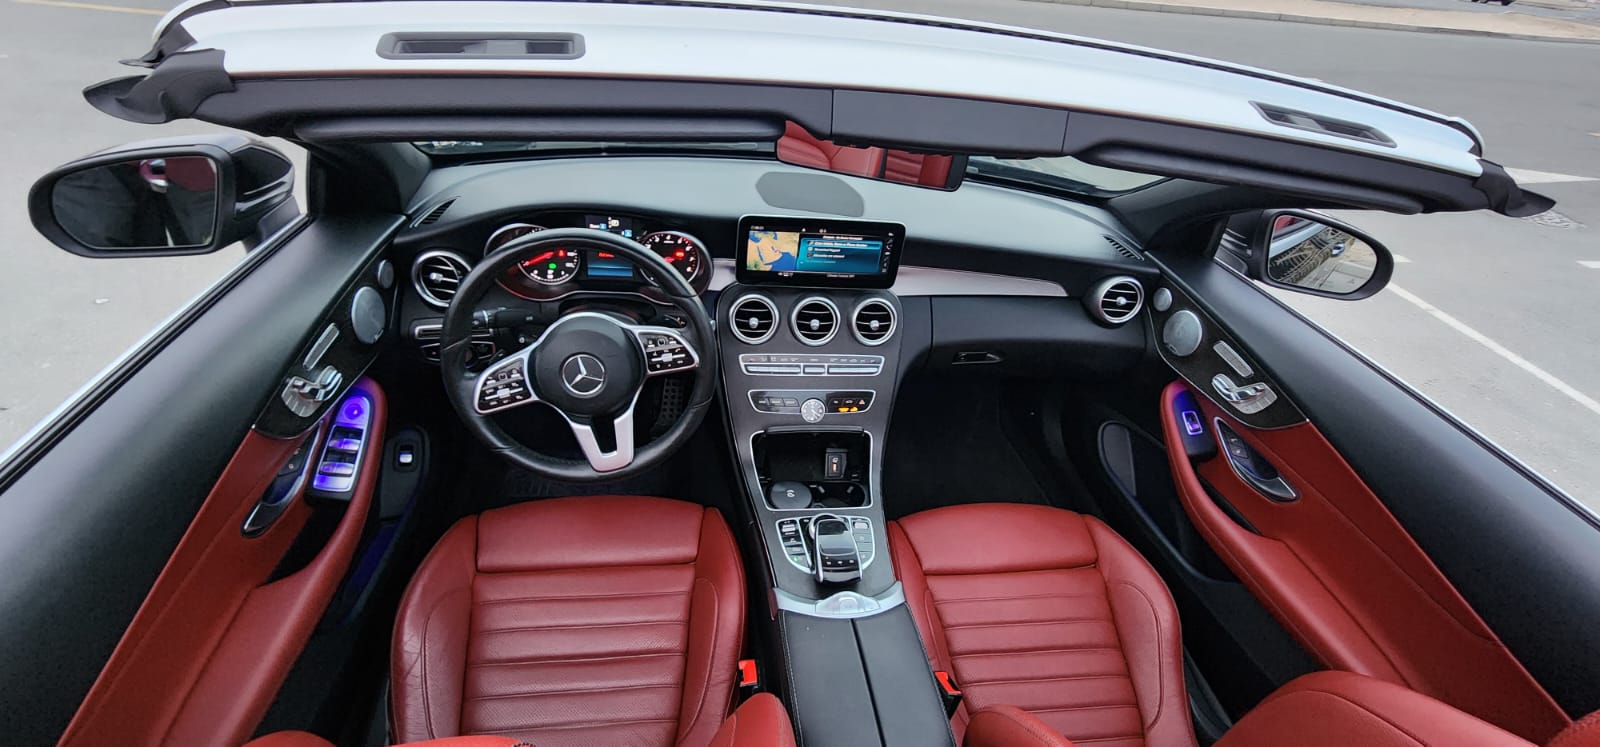 Mercedes C300 convertible 2020